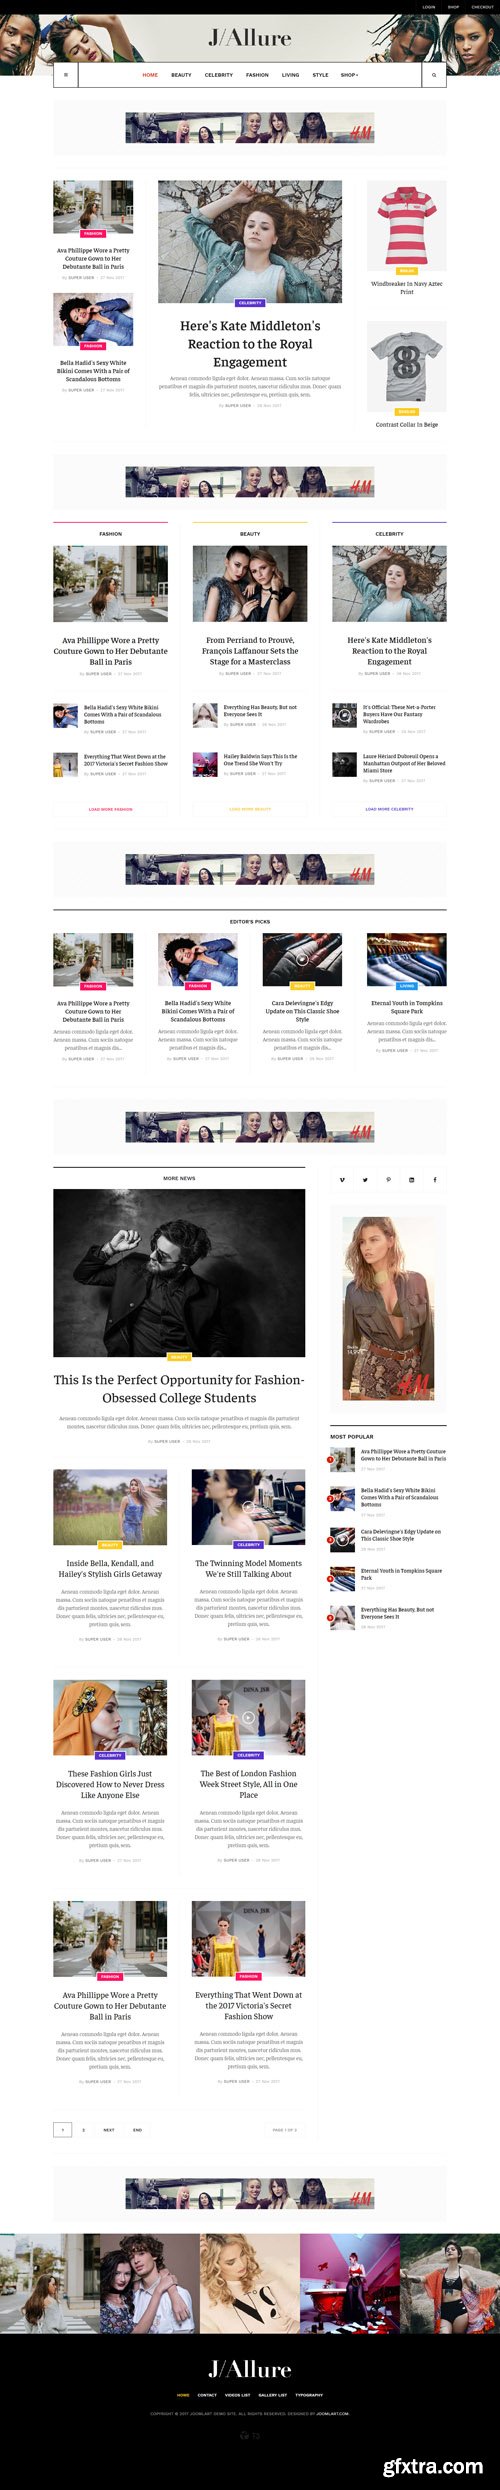 JoomlArt - JA Allure v1.0.0 - Creative Joomla Template for beauty and fashion magazine websites